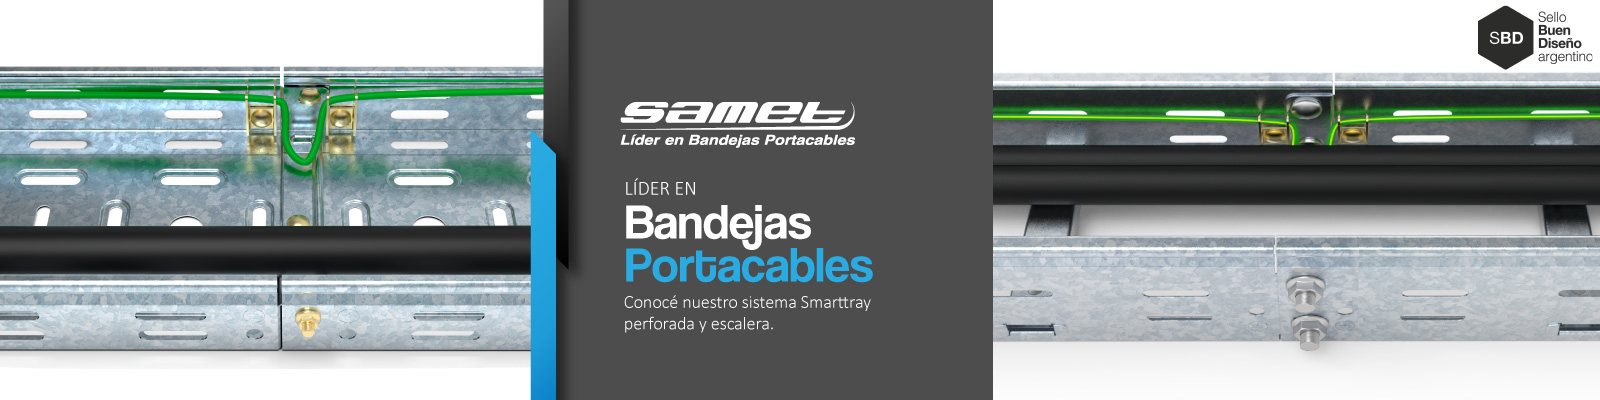 Samet Bandejas Portacables